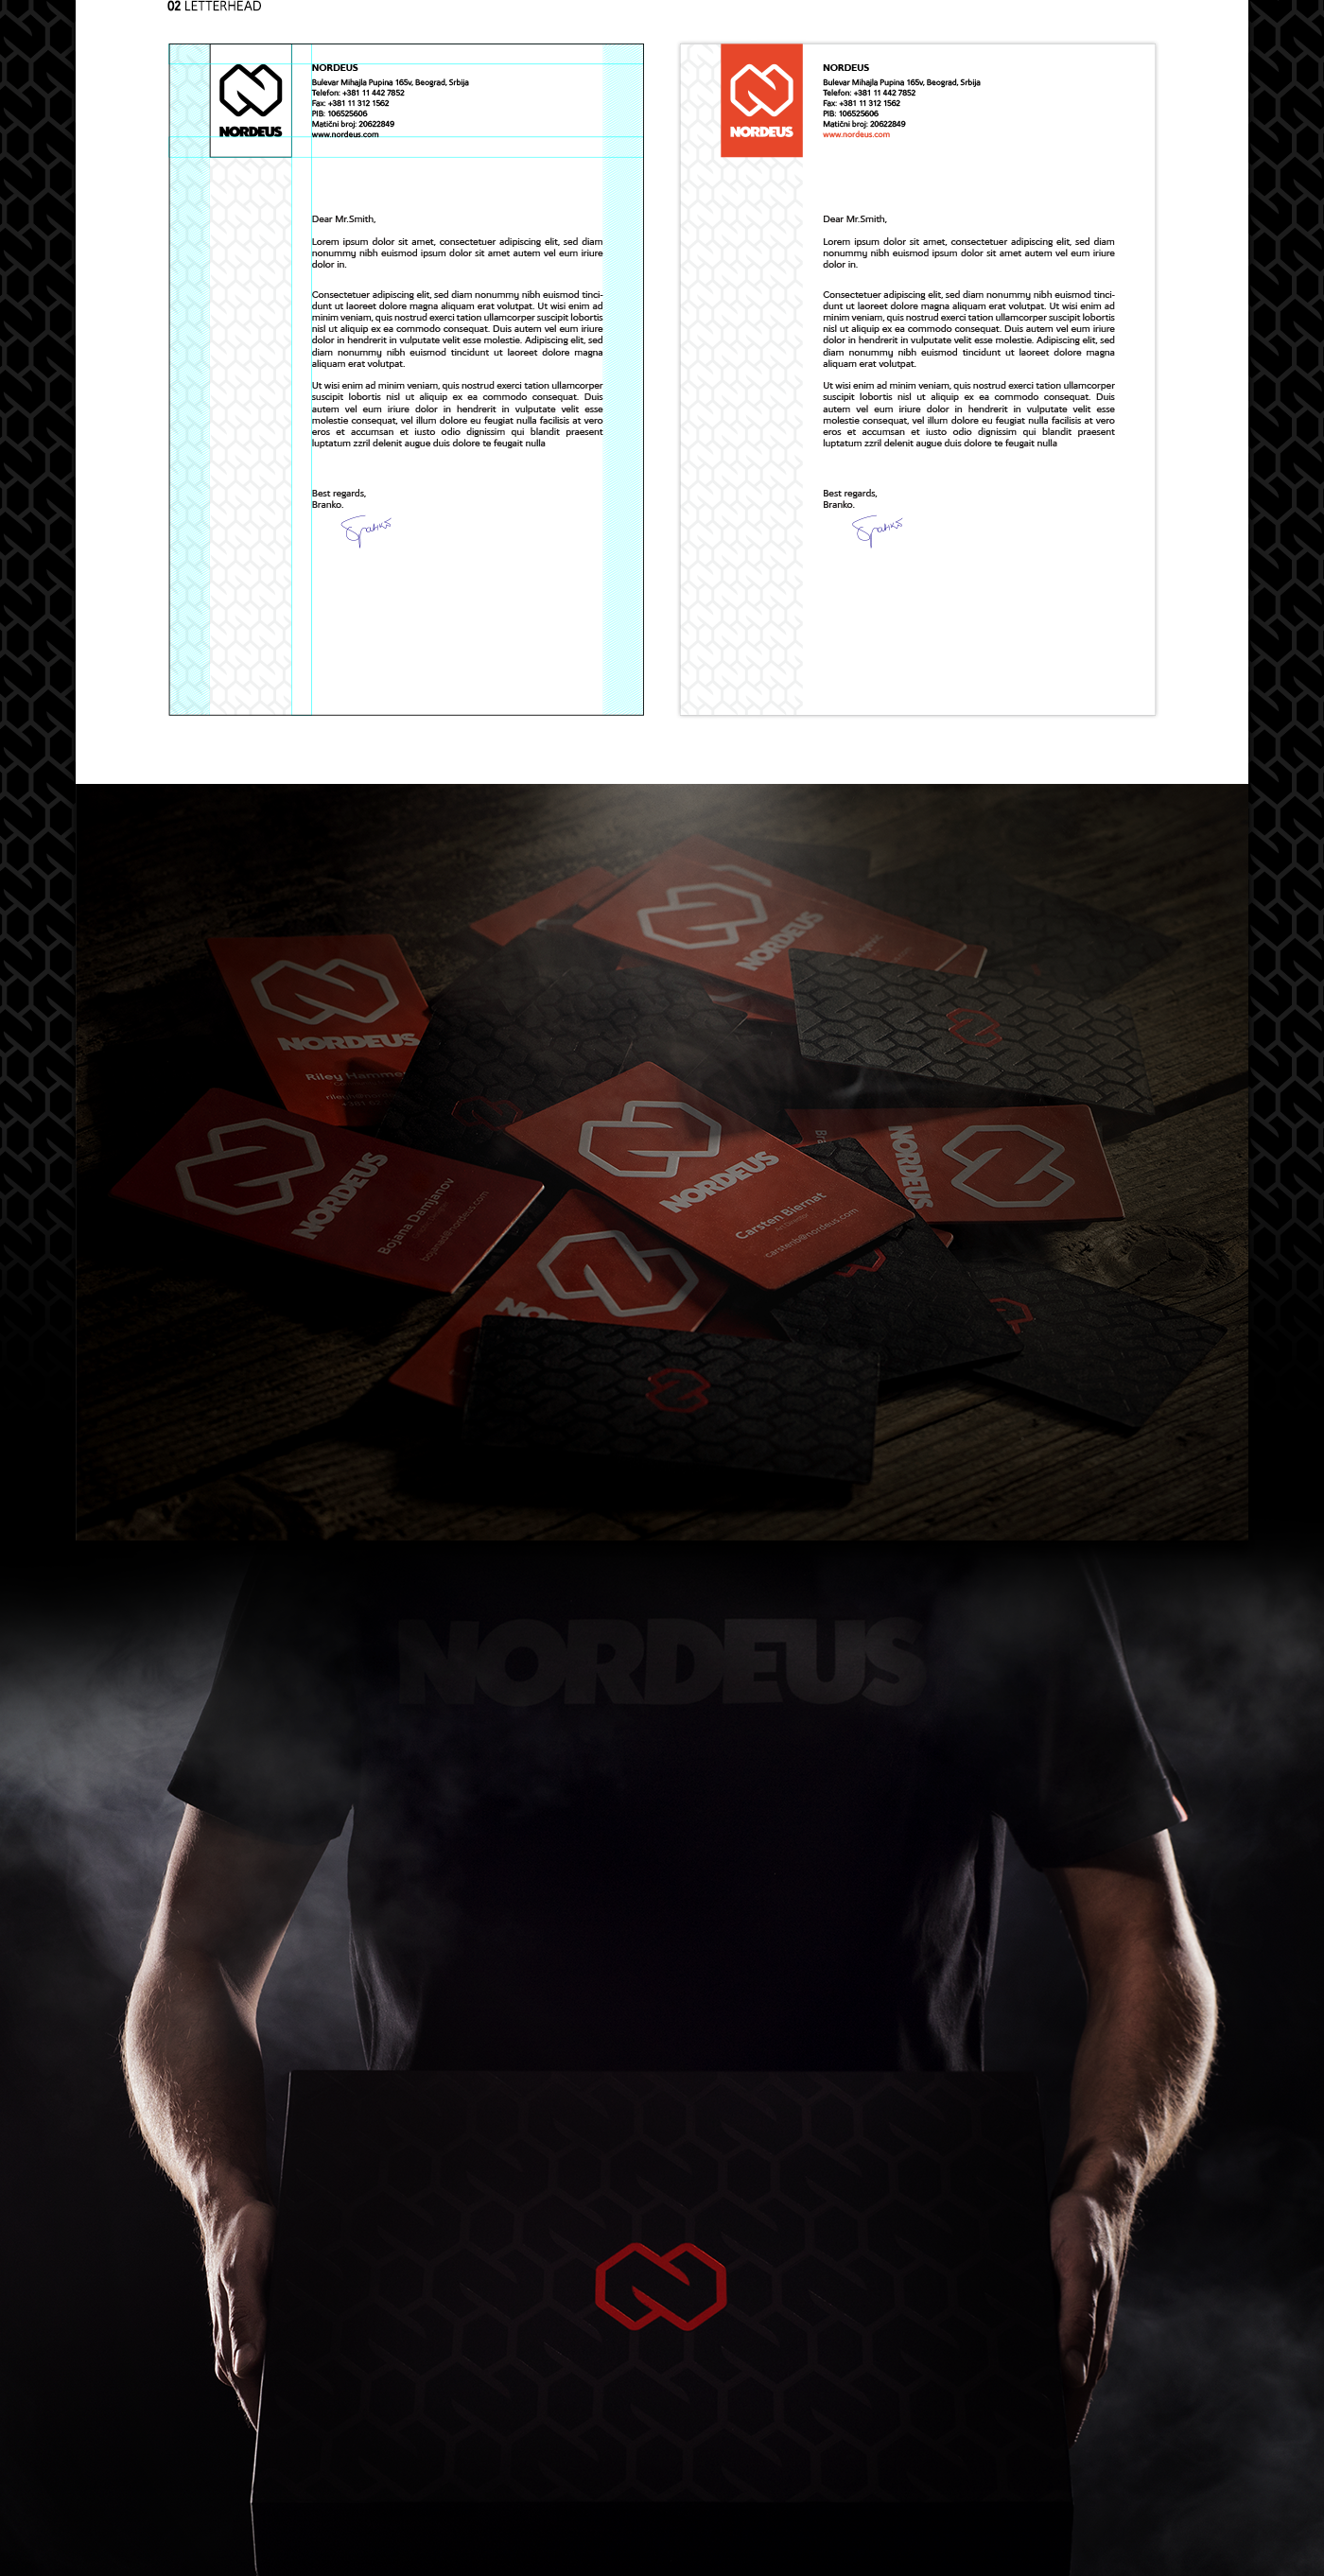 Gaming Nordeus brand visual identity design Stationery print design  art direction  Photography  rebranding